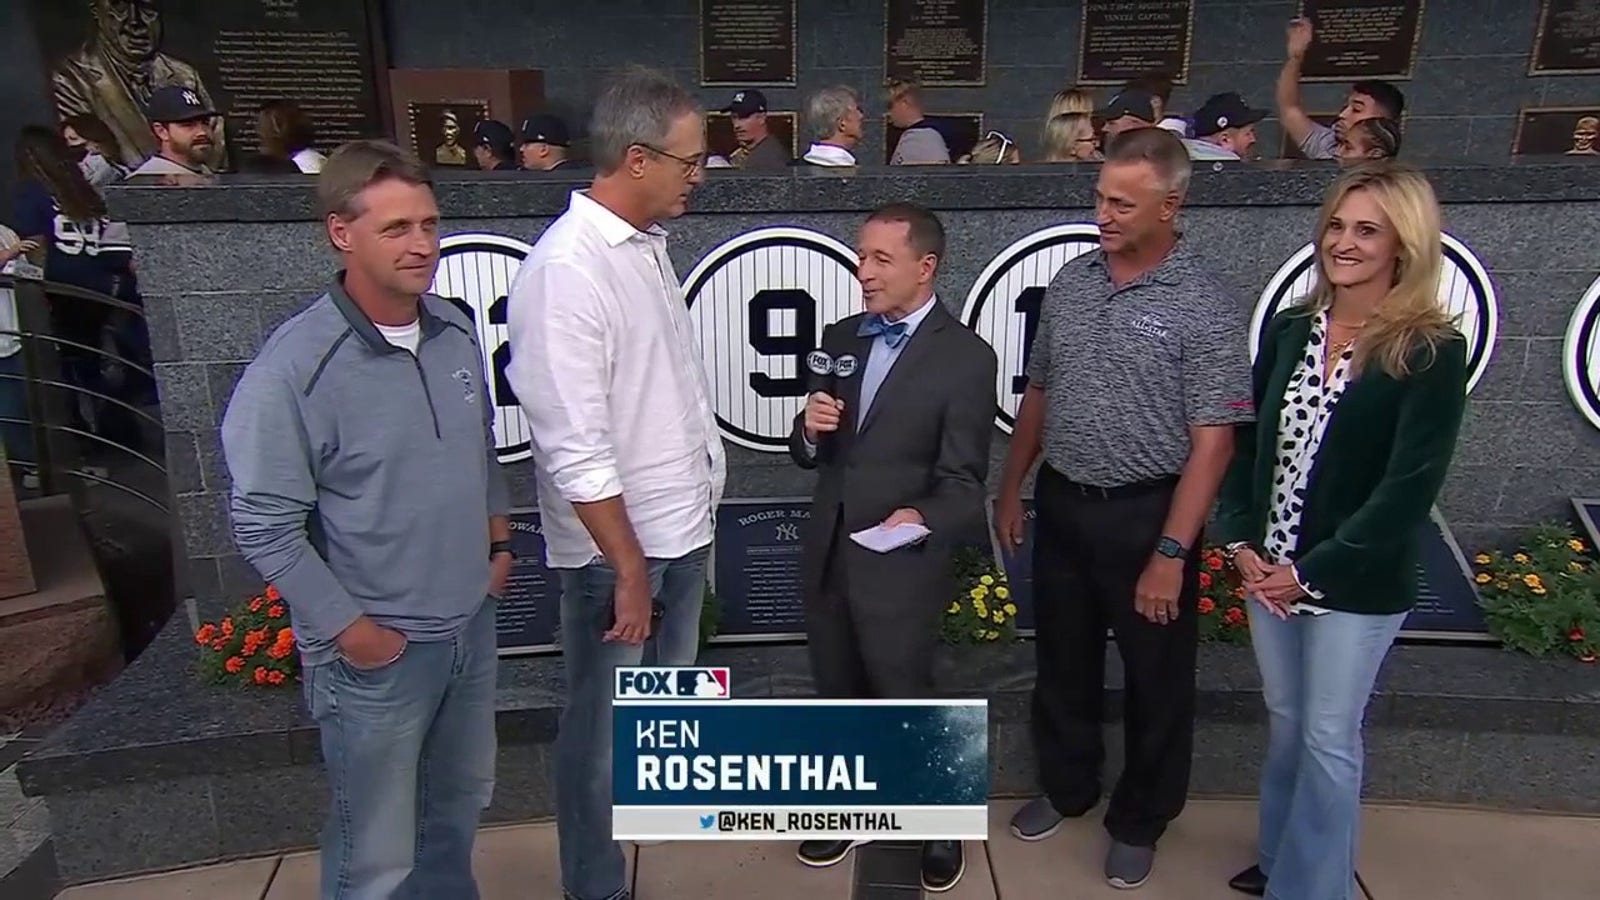 Ken Rosenthal speaks to the family of Yankees legend Roger Maris